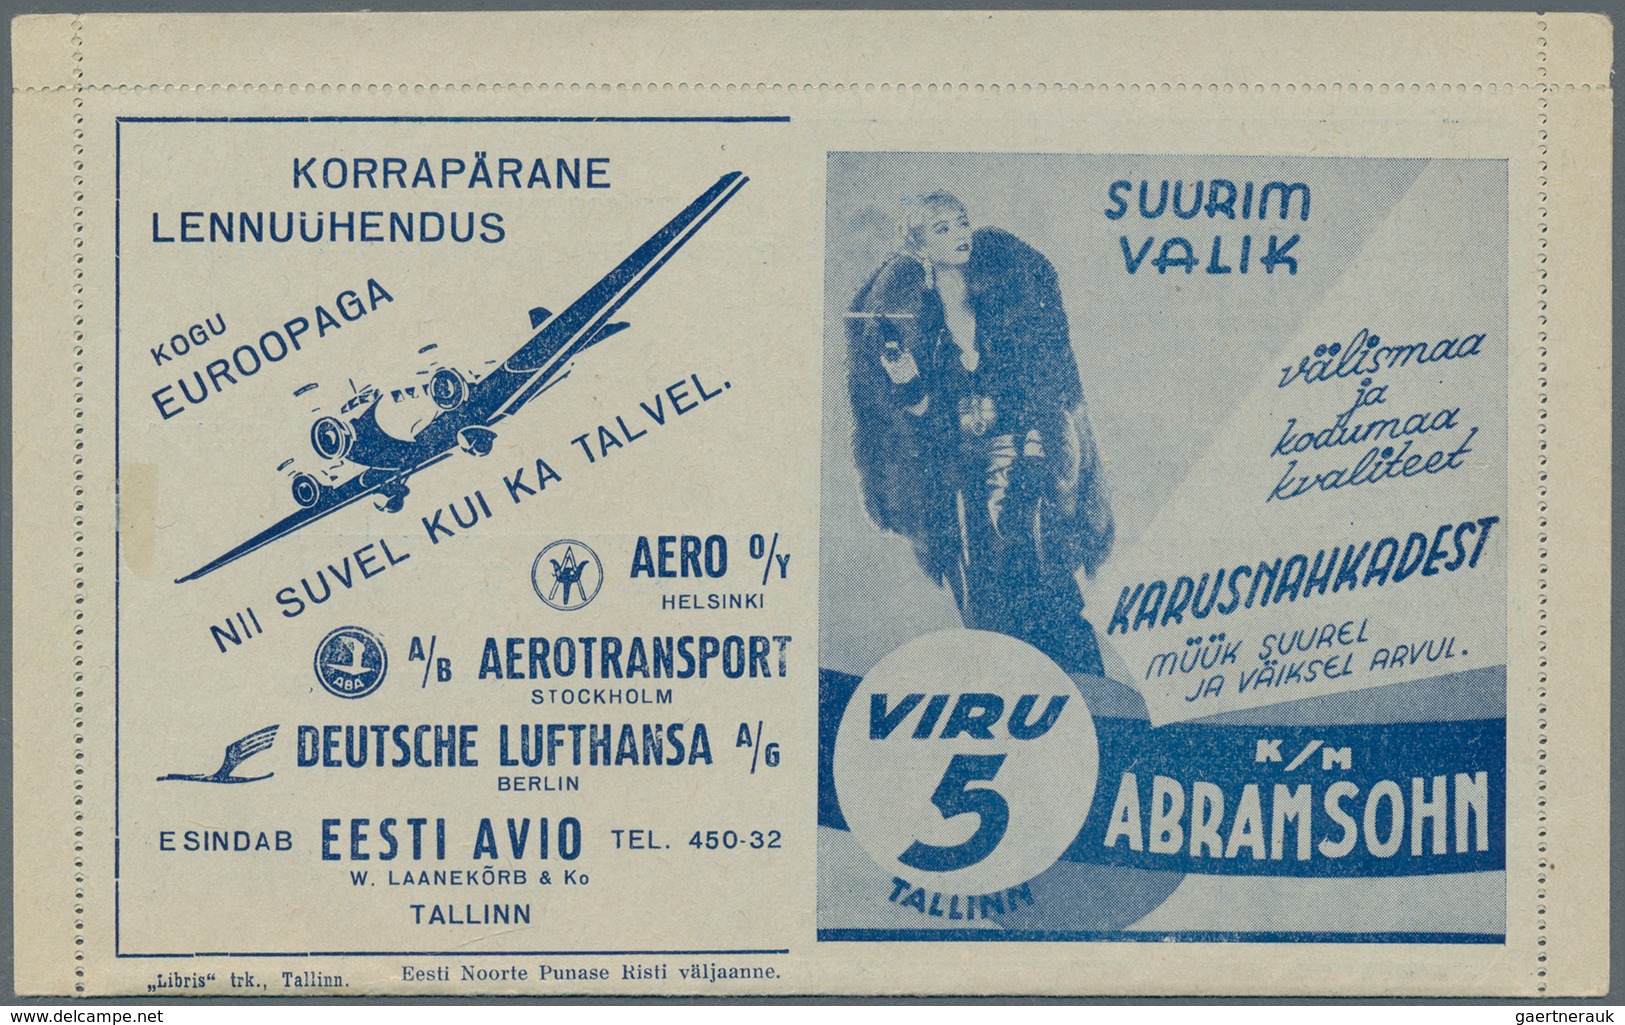 Estland - Ganzsachen: 1937, 10 S Coats Of Arms, Advertising Card Letter "PARO", Series No. 13 And 22 - Estonie